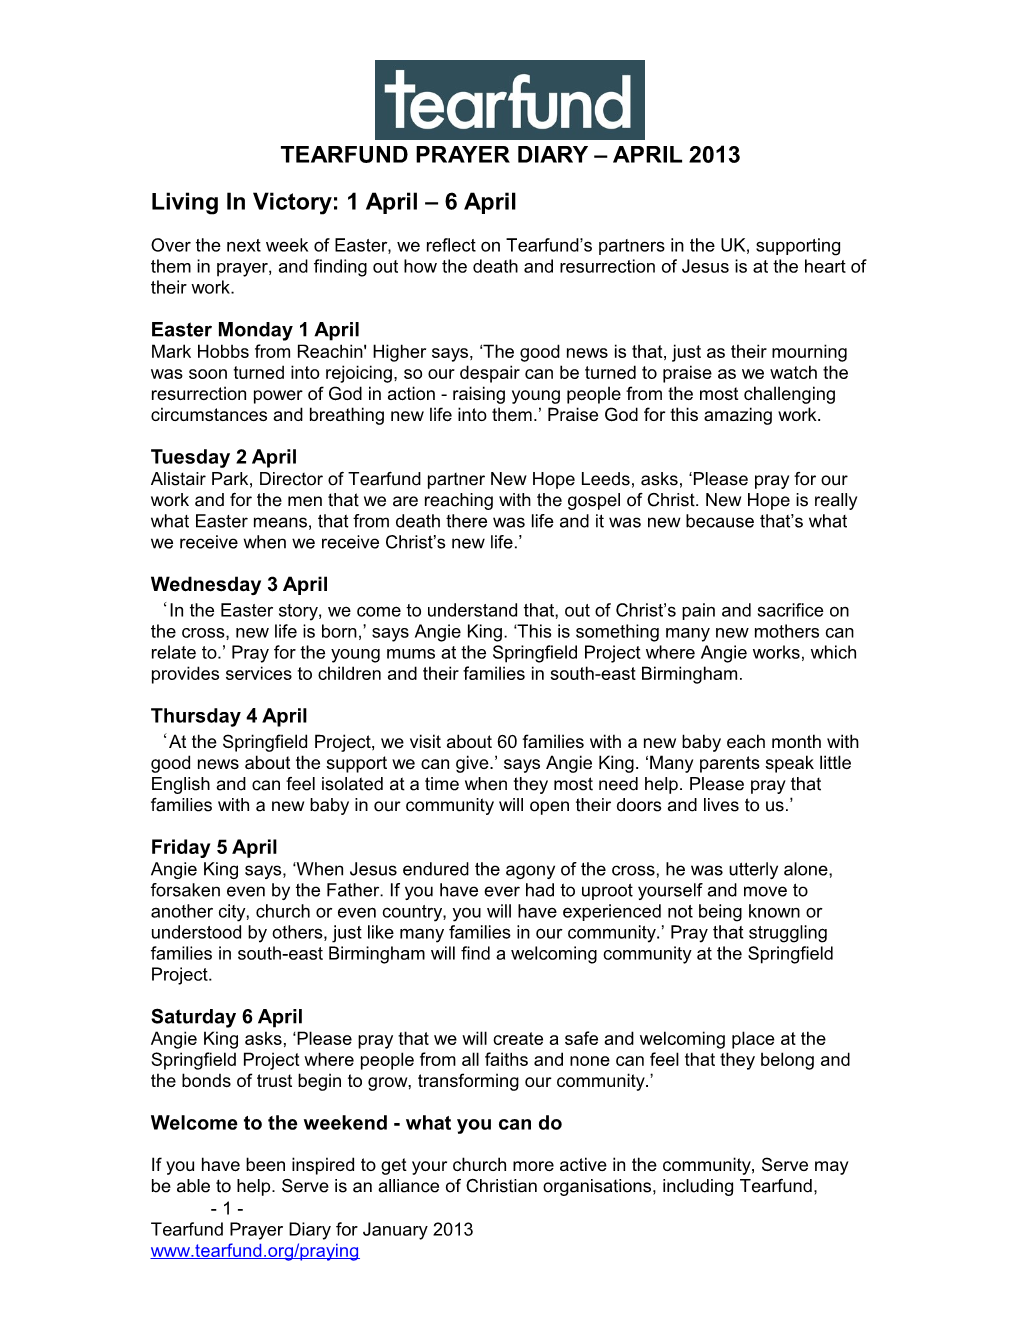 The Tearfund Prayer Diary for January 2012